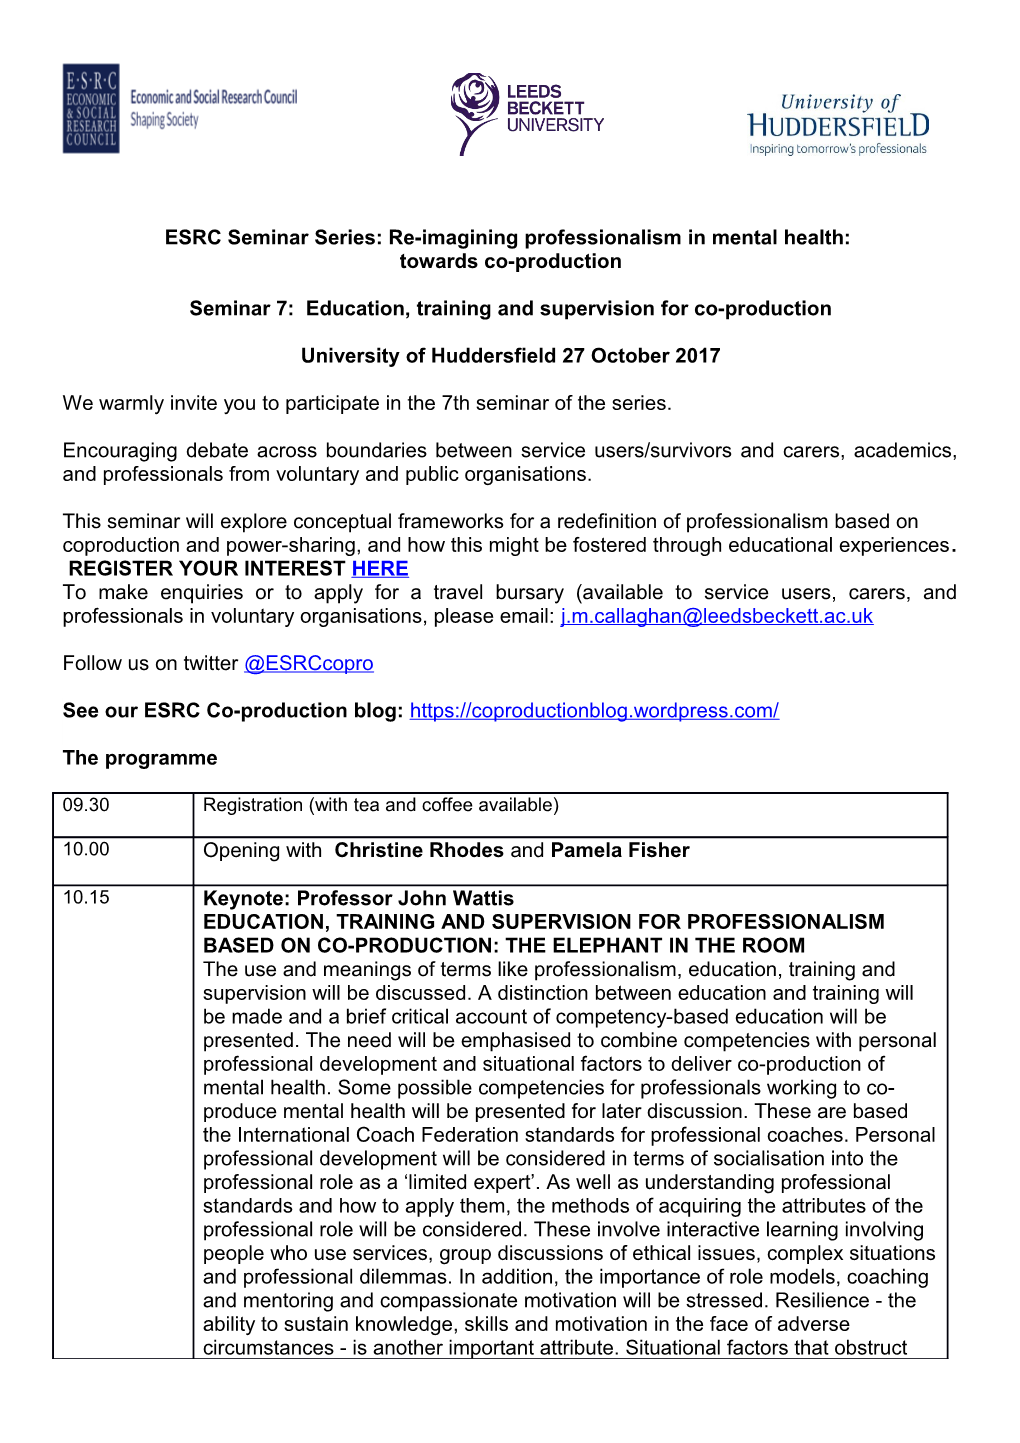 ESRC Seminar Series: Re-Imagining Professionalism in Mental Health